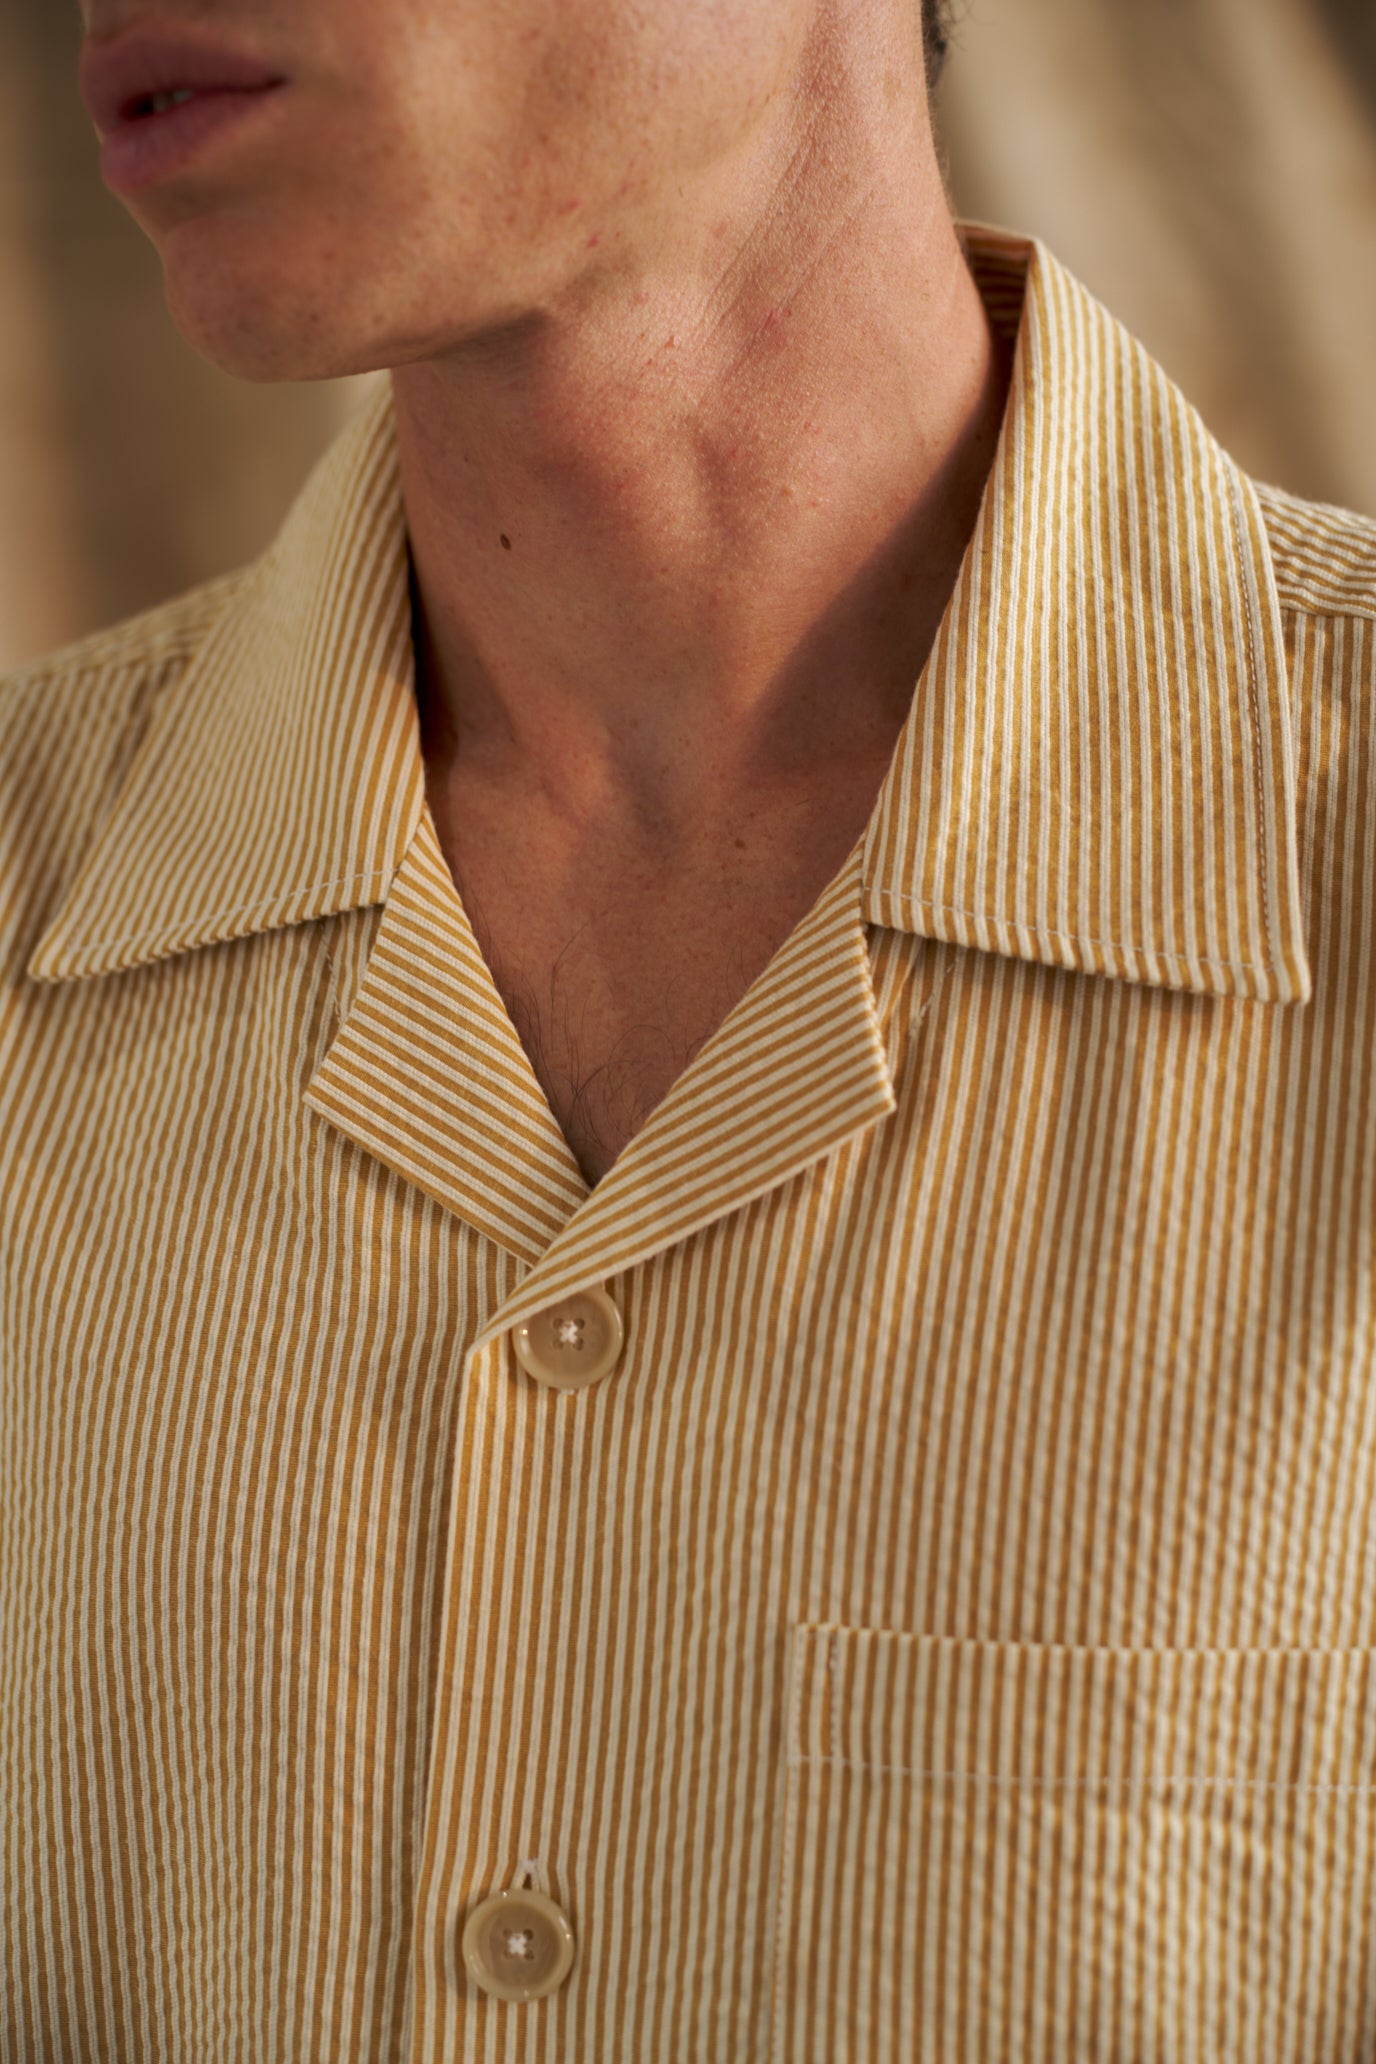 S/S 'Camp Collar' Shirt in Butter Stripe Cotton Seersucker